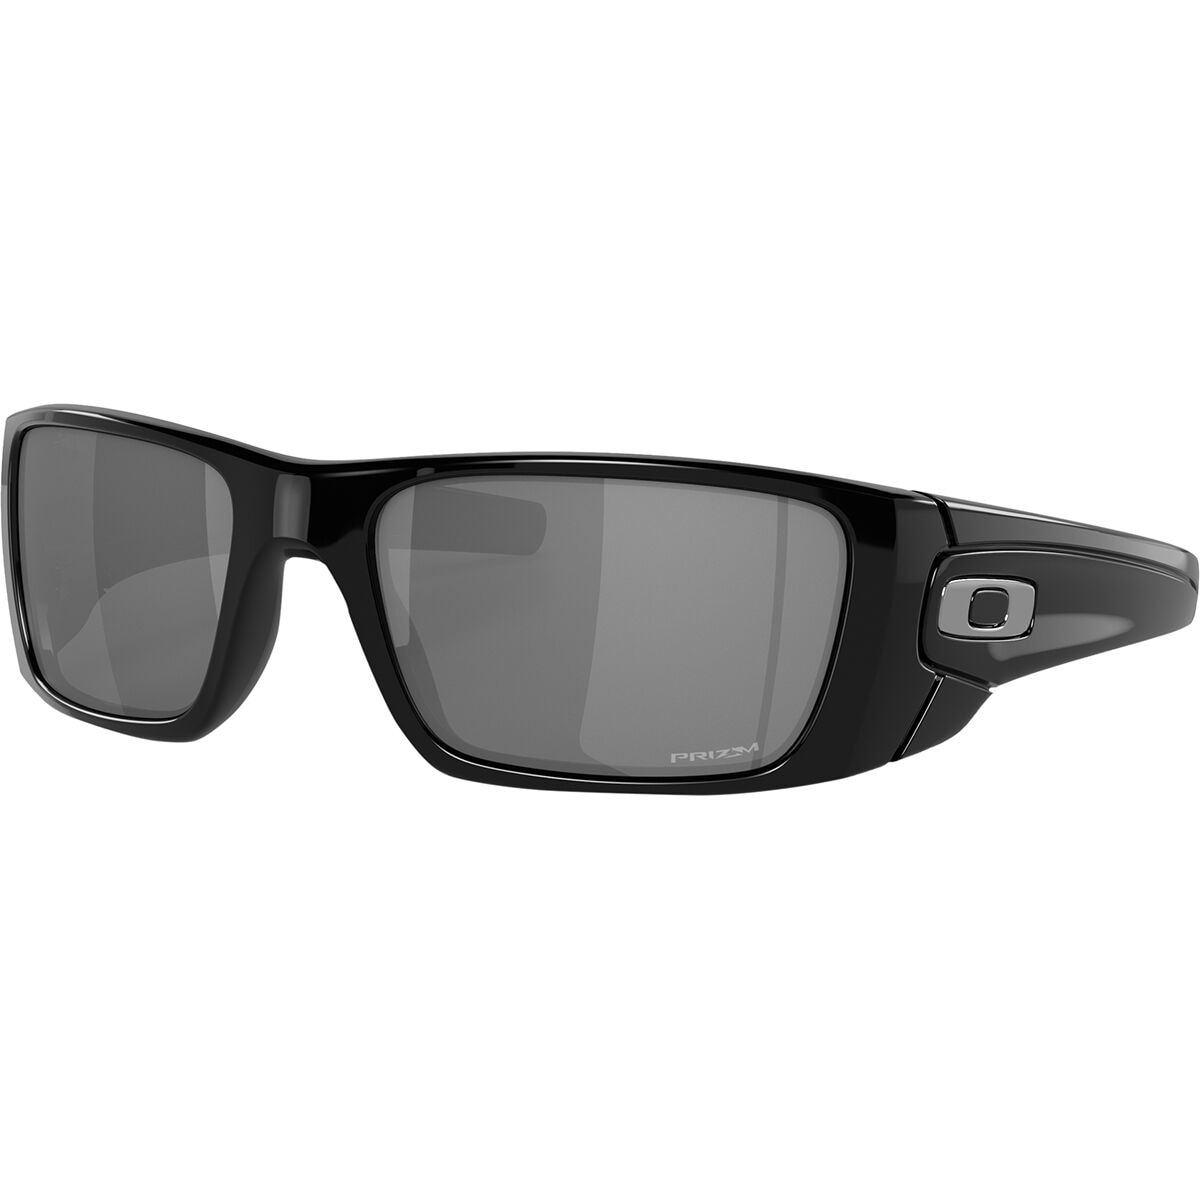 Oakley Fuel Cell Prizm Sunglasses - Men's